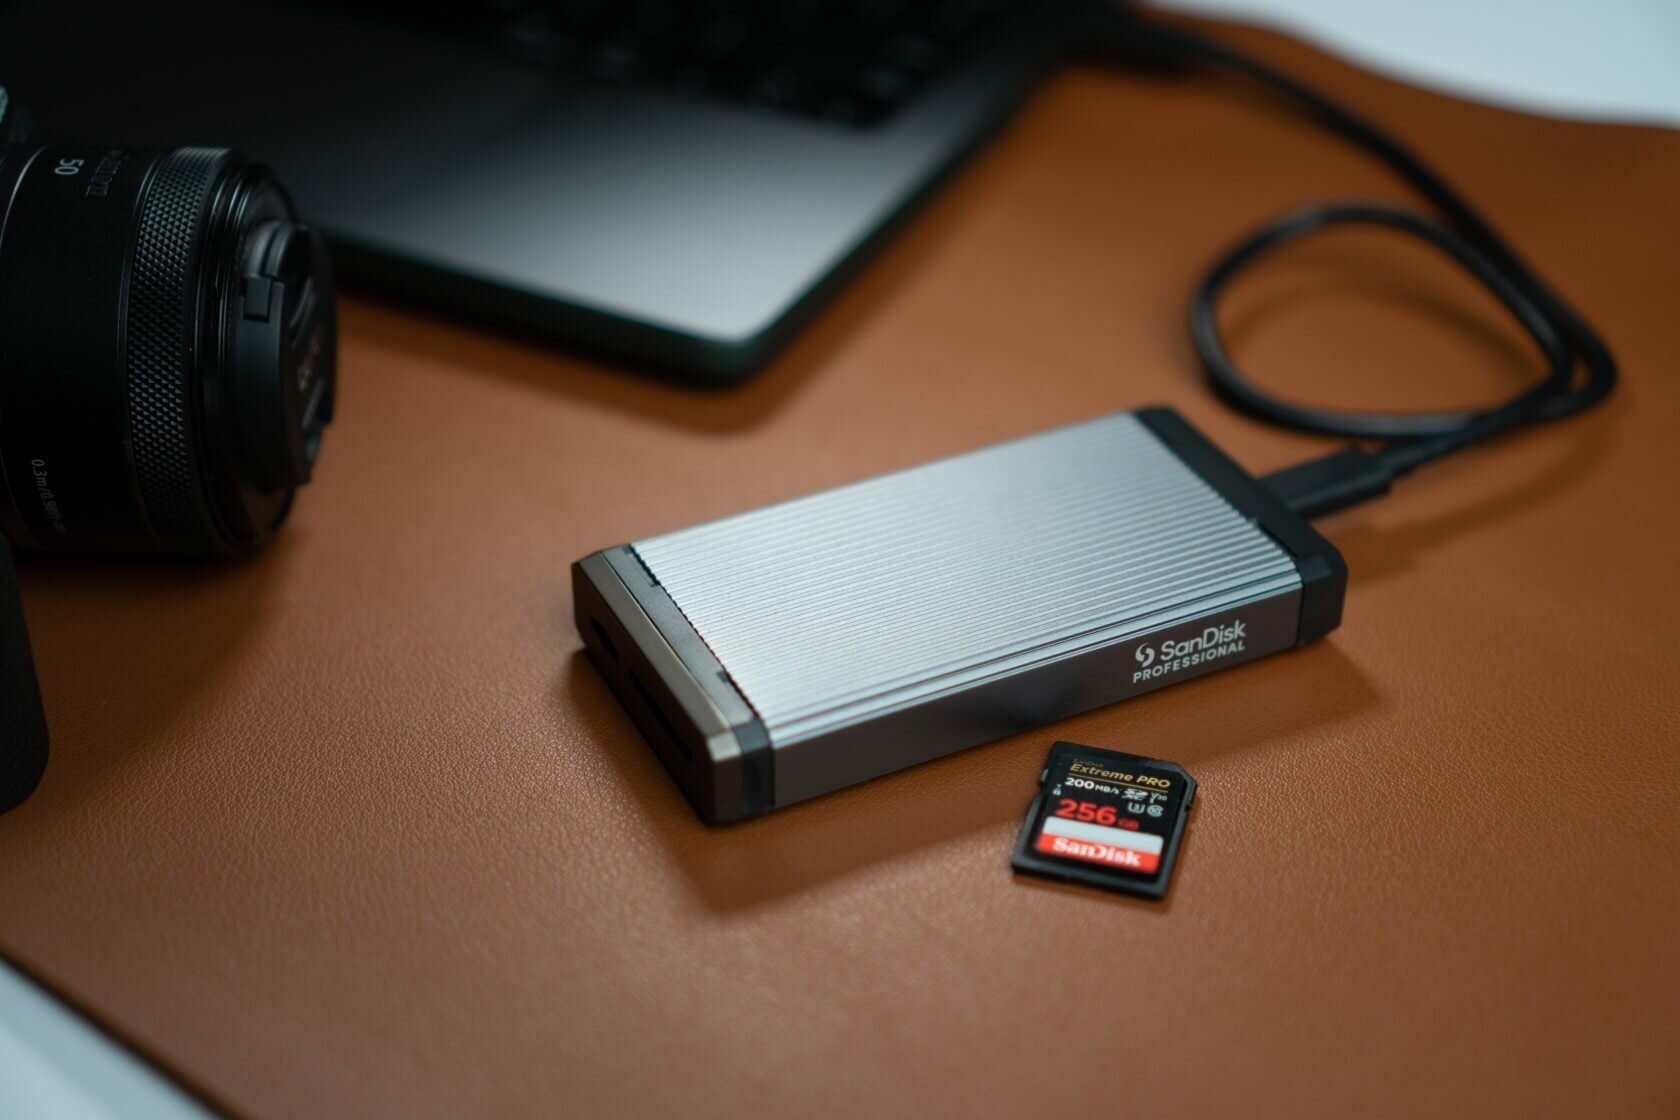 SanDisk 512GB Extreme Pro microSDXC UHS-I Memory Card - SDSQXCD